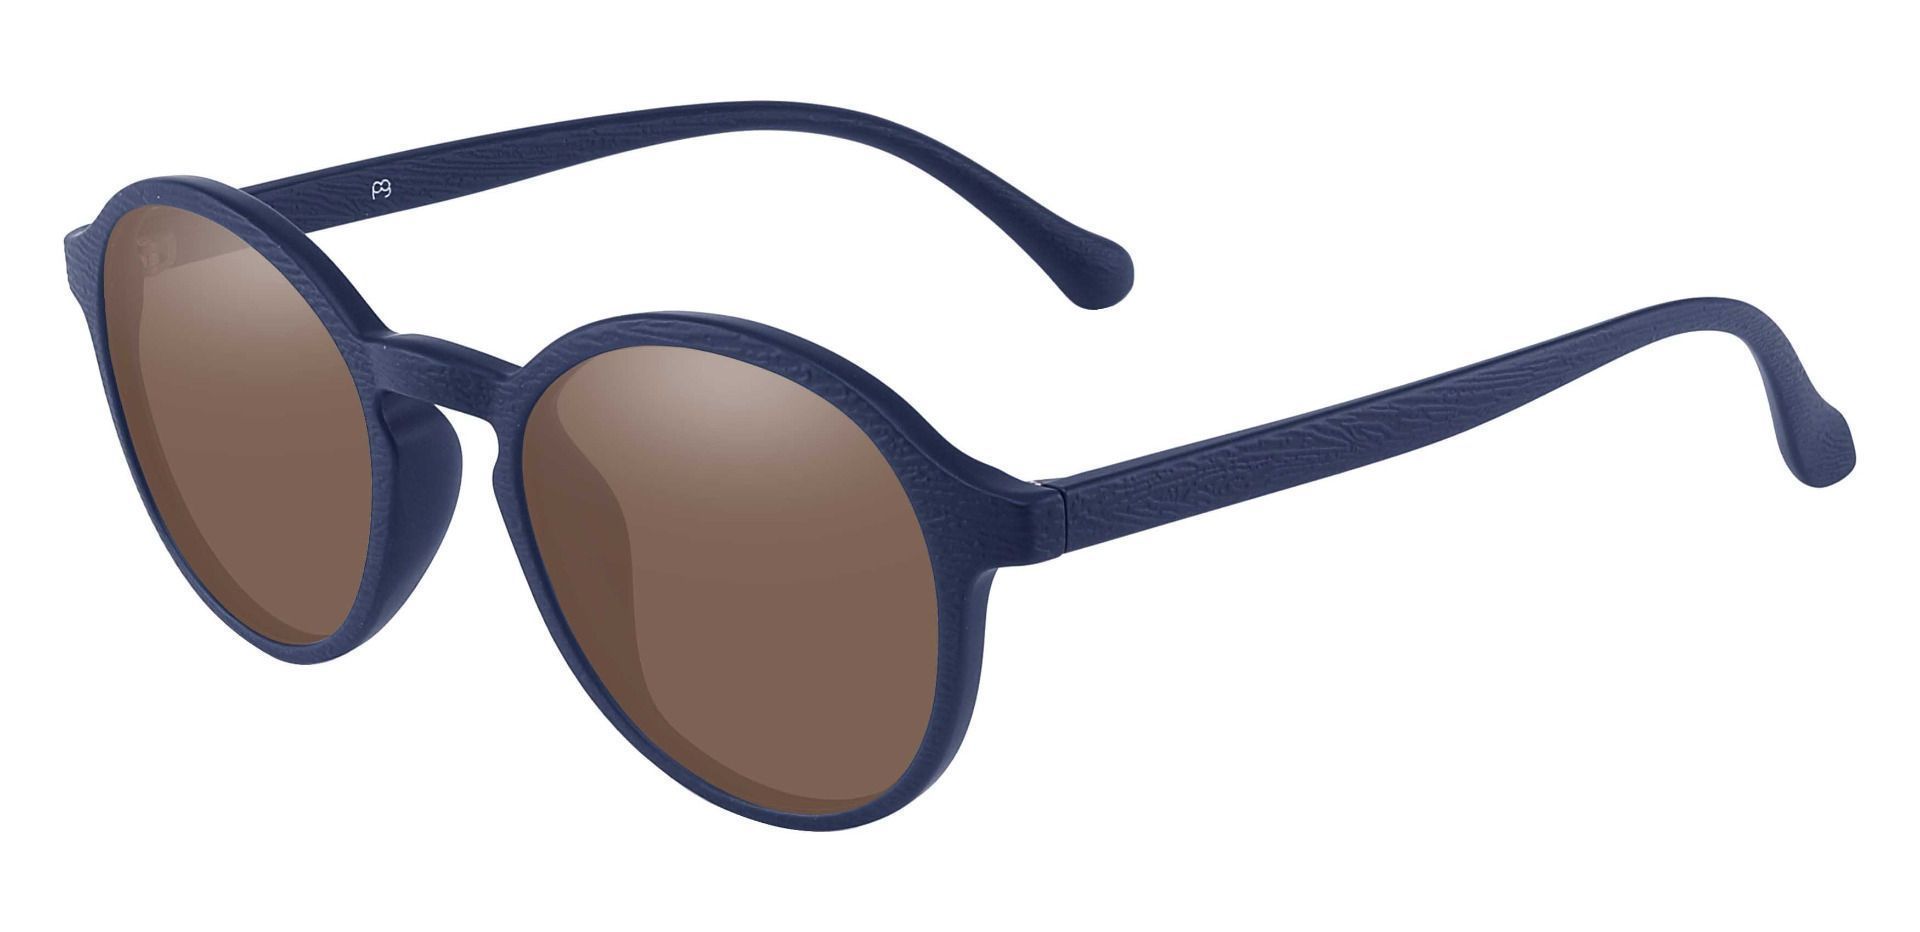 Whitney Round Progressive Sunglasses - Blue Frame With Brown Lenses